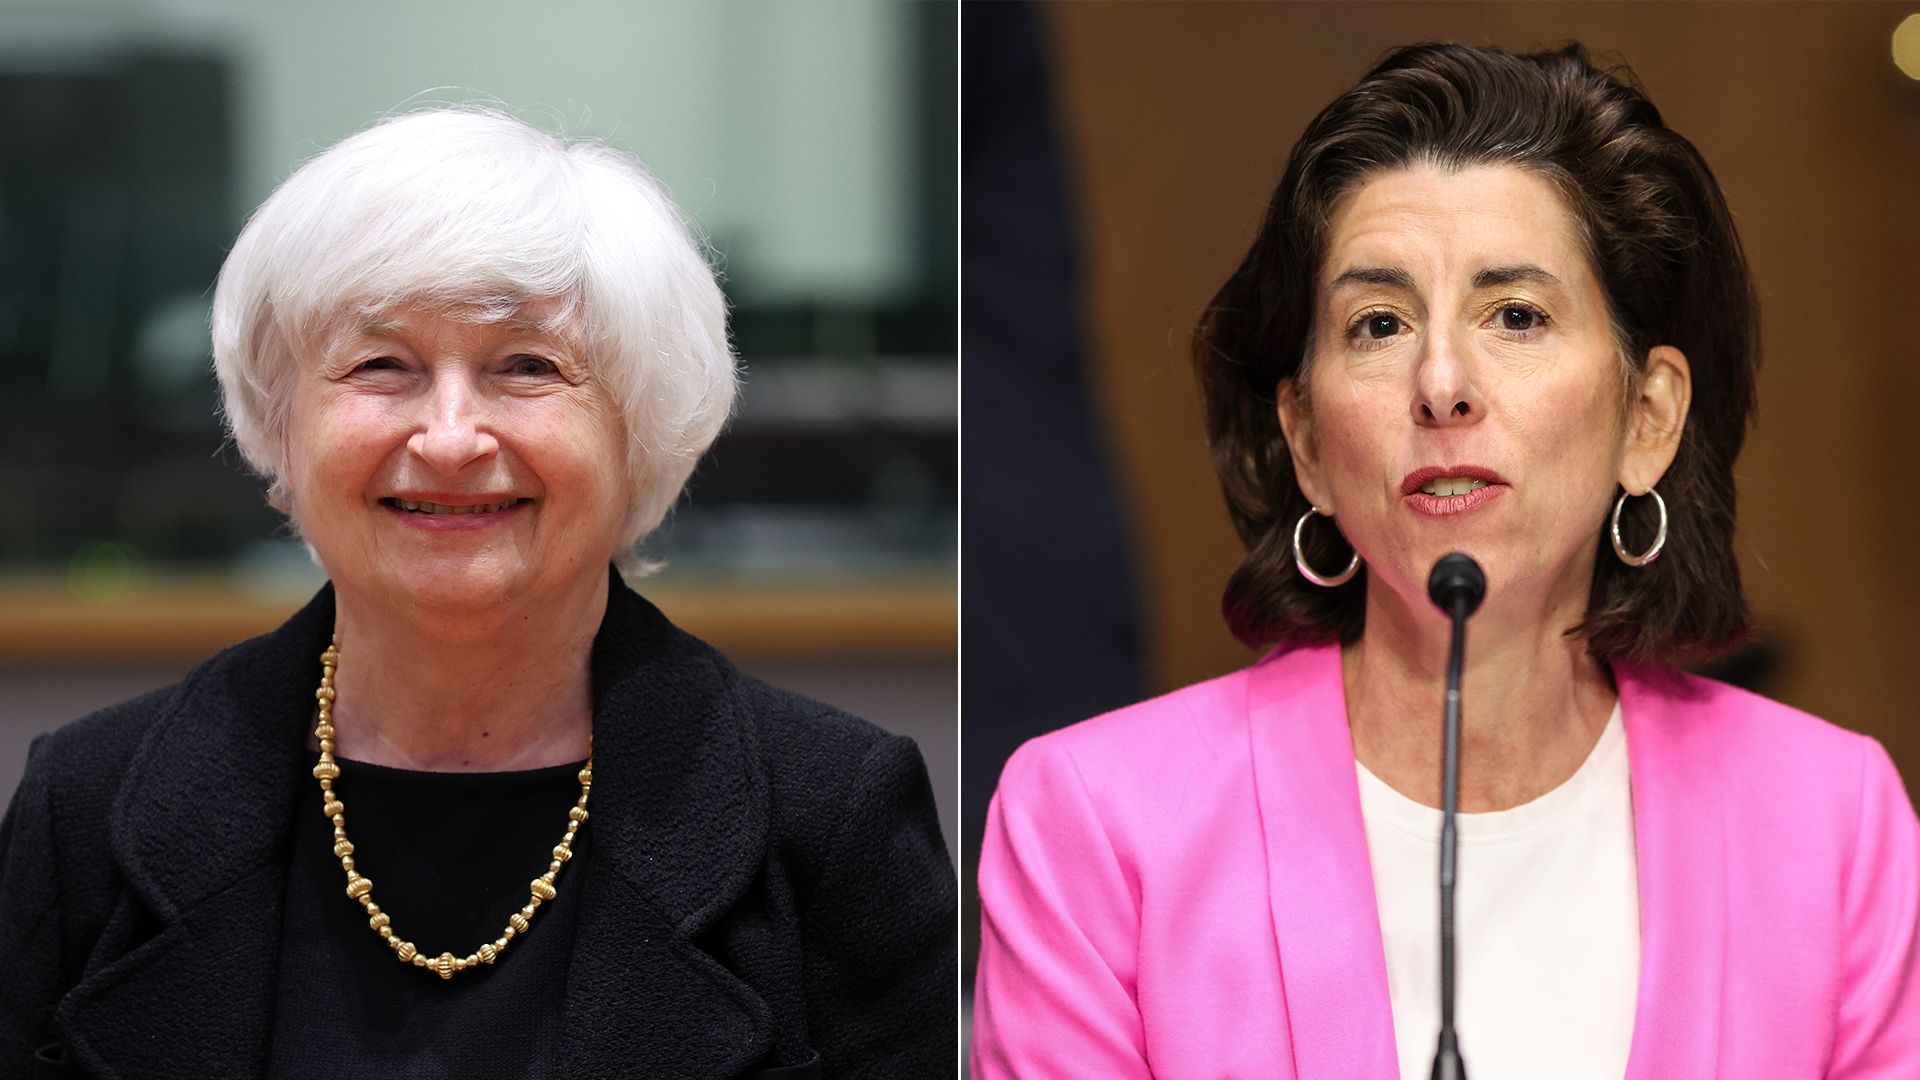 Treasury Secretary Janet Yellen and Commerce Secretary Gina Raimondo are seen in side-by-side images.